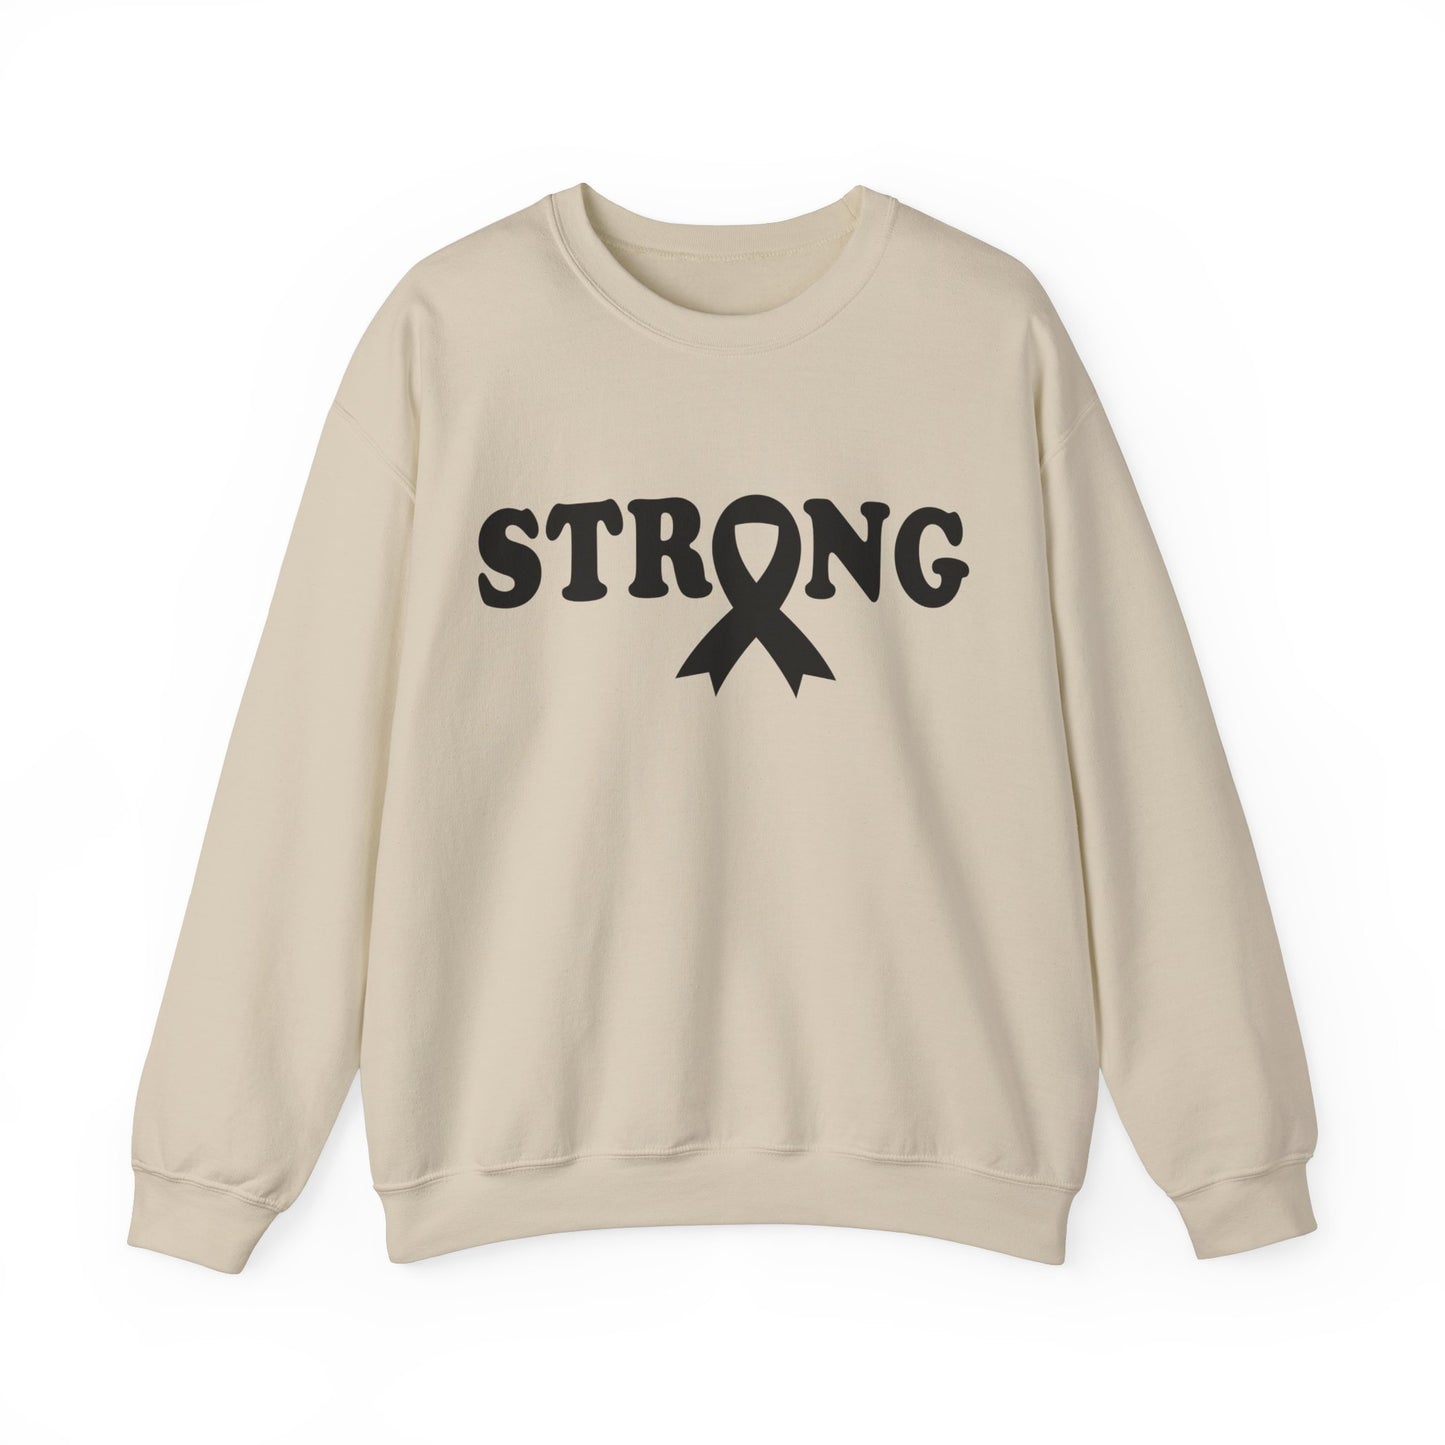 Strong Cancer Advocate Adult Unisex Sweatshirt